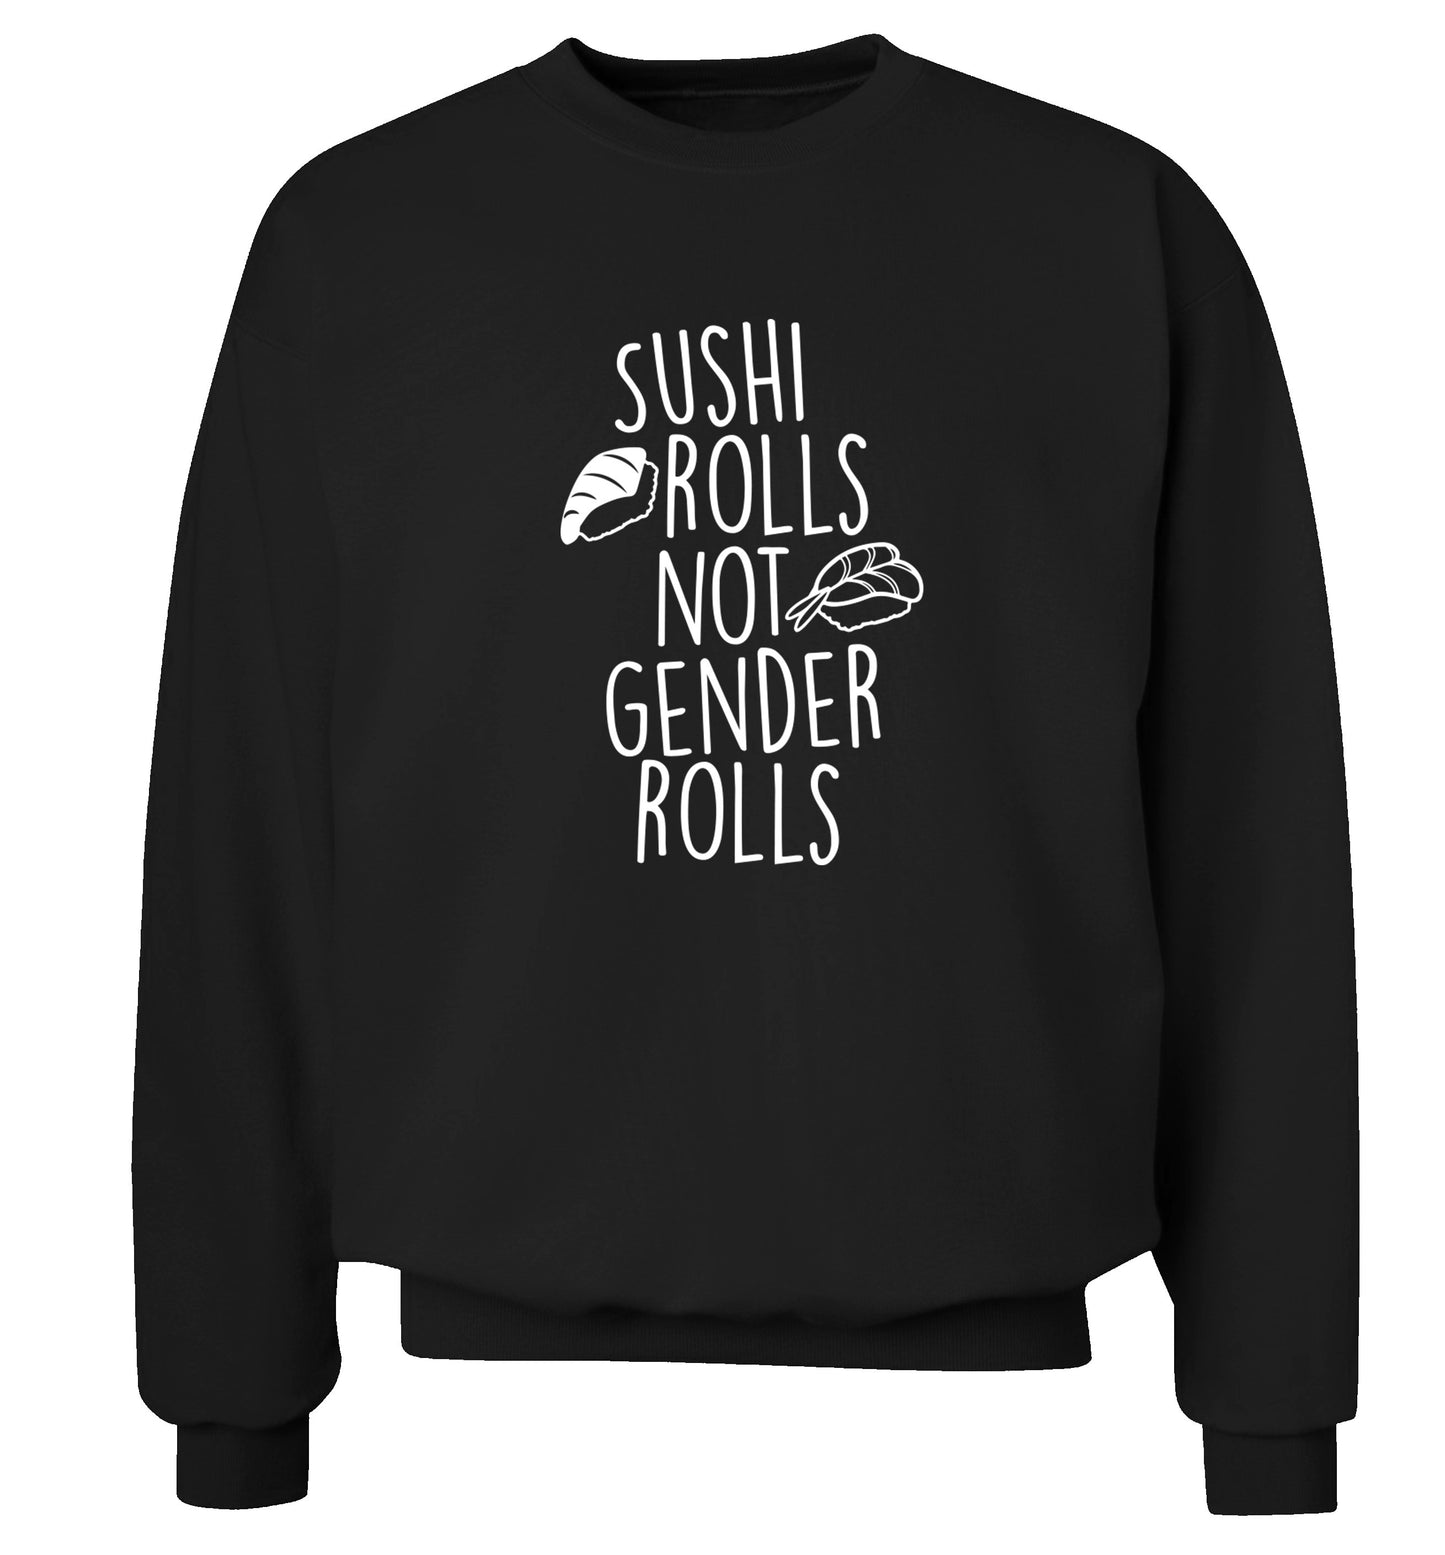 Sushi rolls not gender rolls Adult's unisex black Sweater 2XL